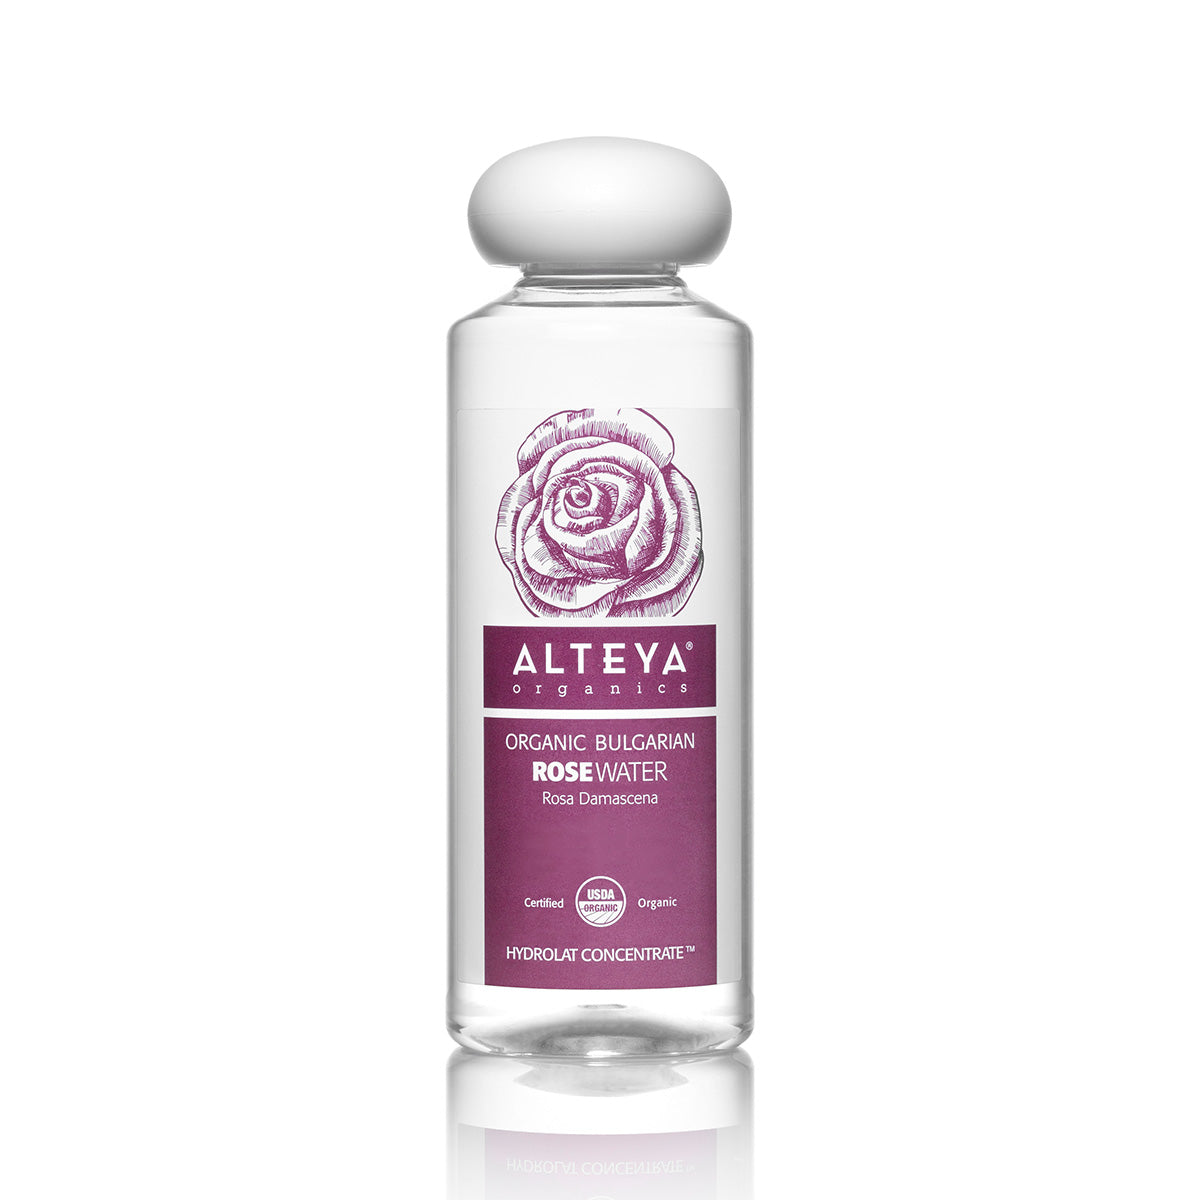 An Organic Bulgarian Rose Water - 8.5 Fl Oz by Alteya Organics providing hydration for skincare on a white background.